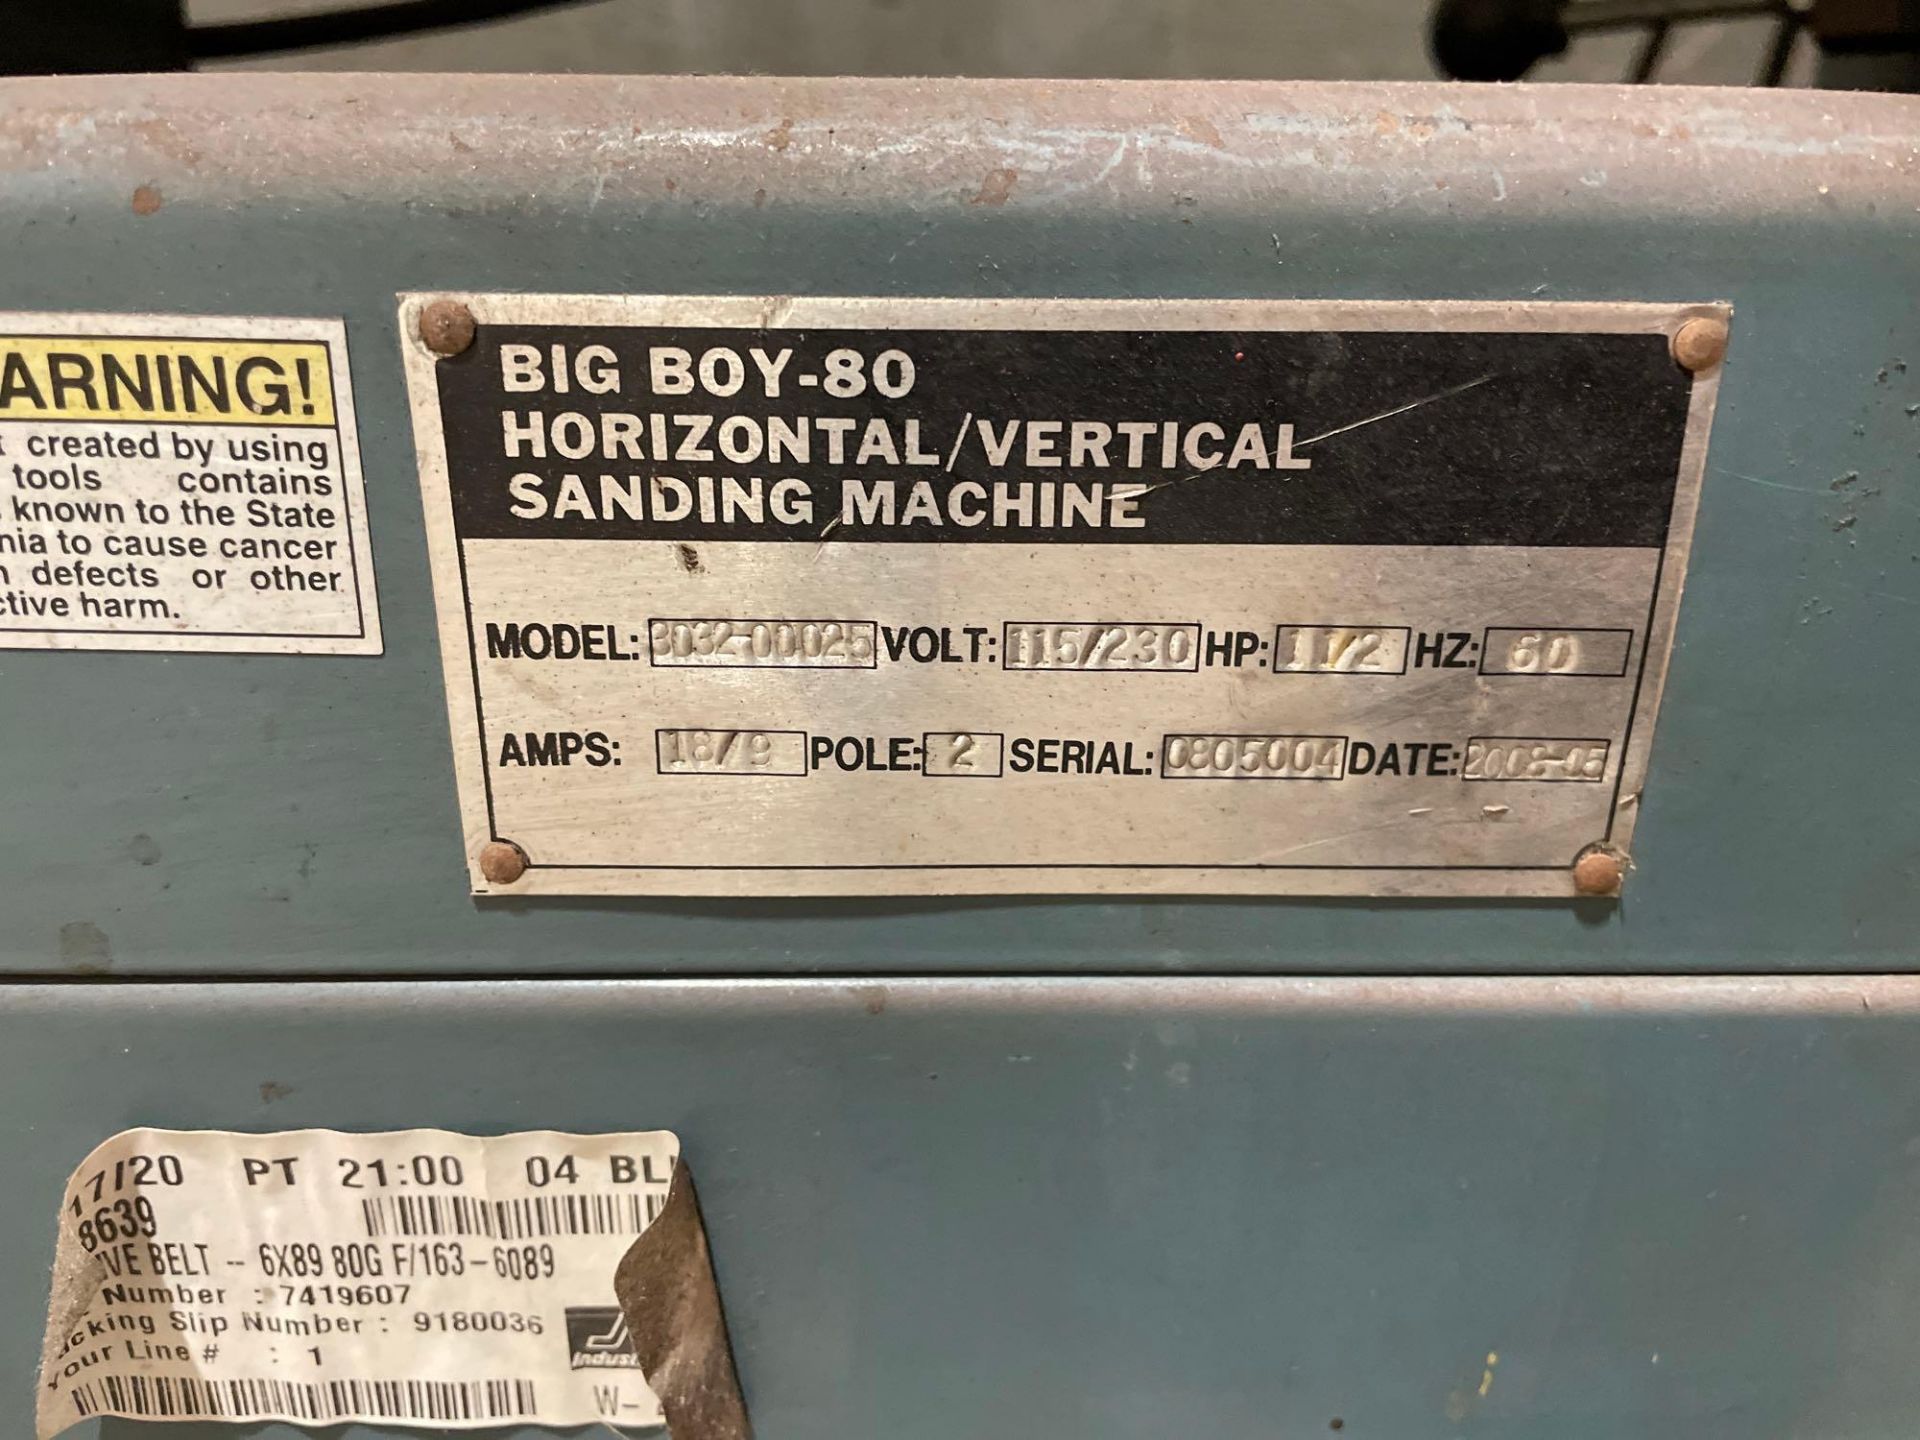 Big Boy-80 Horizontal / Vertical Sanding Machine (Model 303300025) - Image 4 of 4